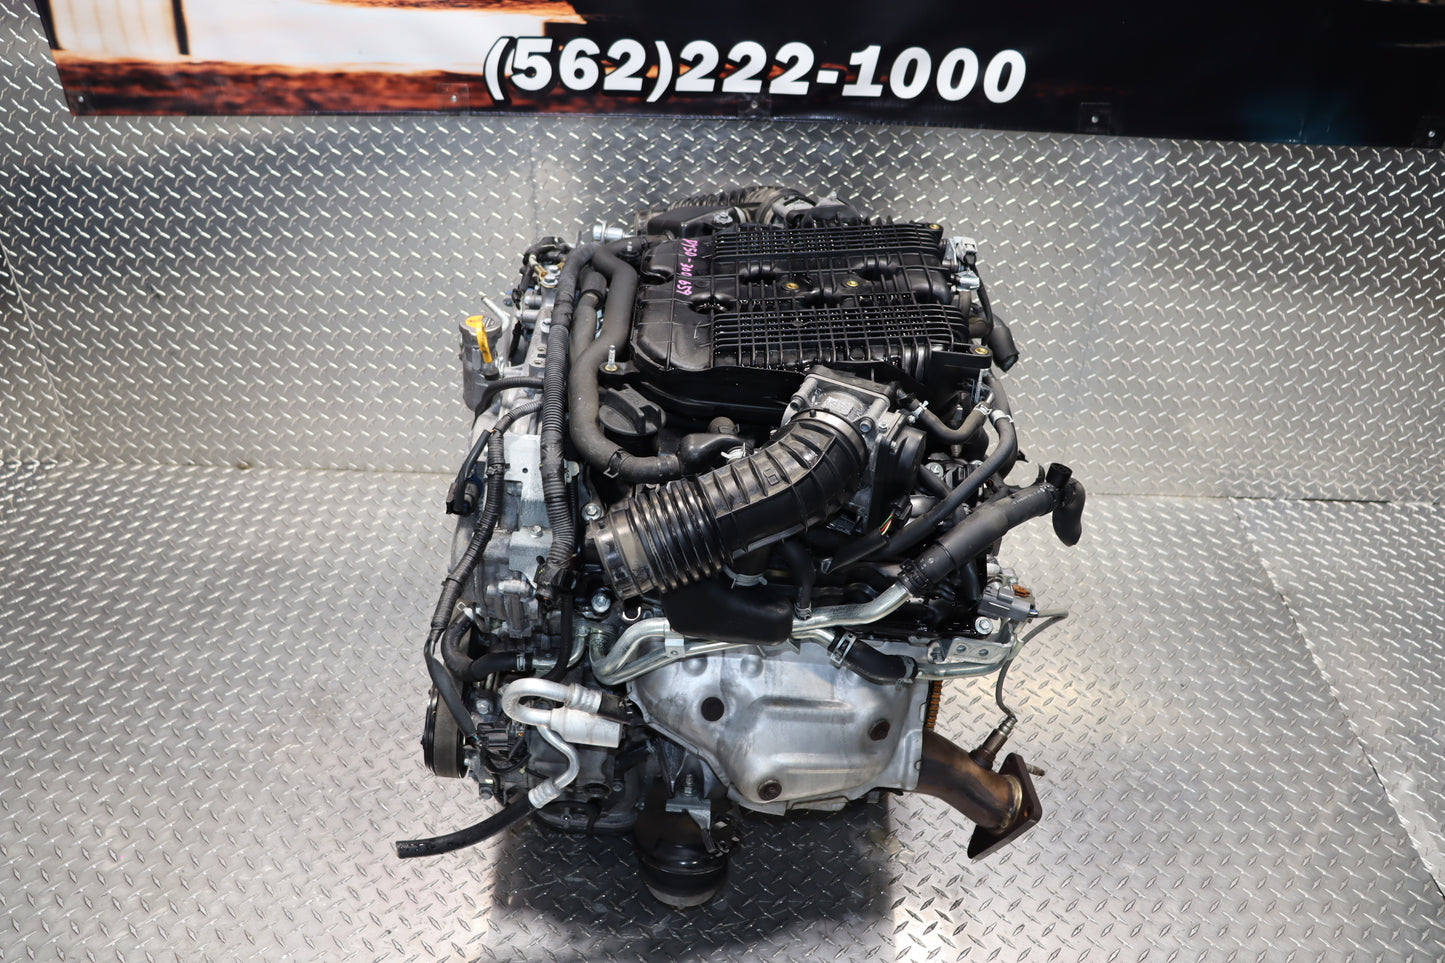 JDM VQ35HR 07-08 Nissan 350Z 3.5L V6 Engine Infiniti G35